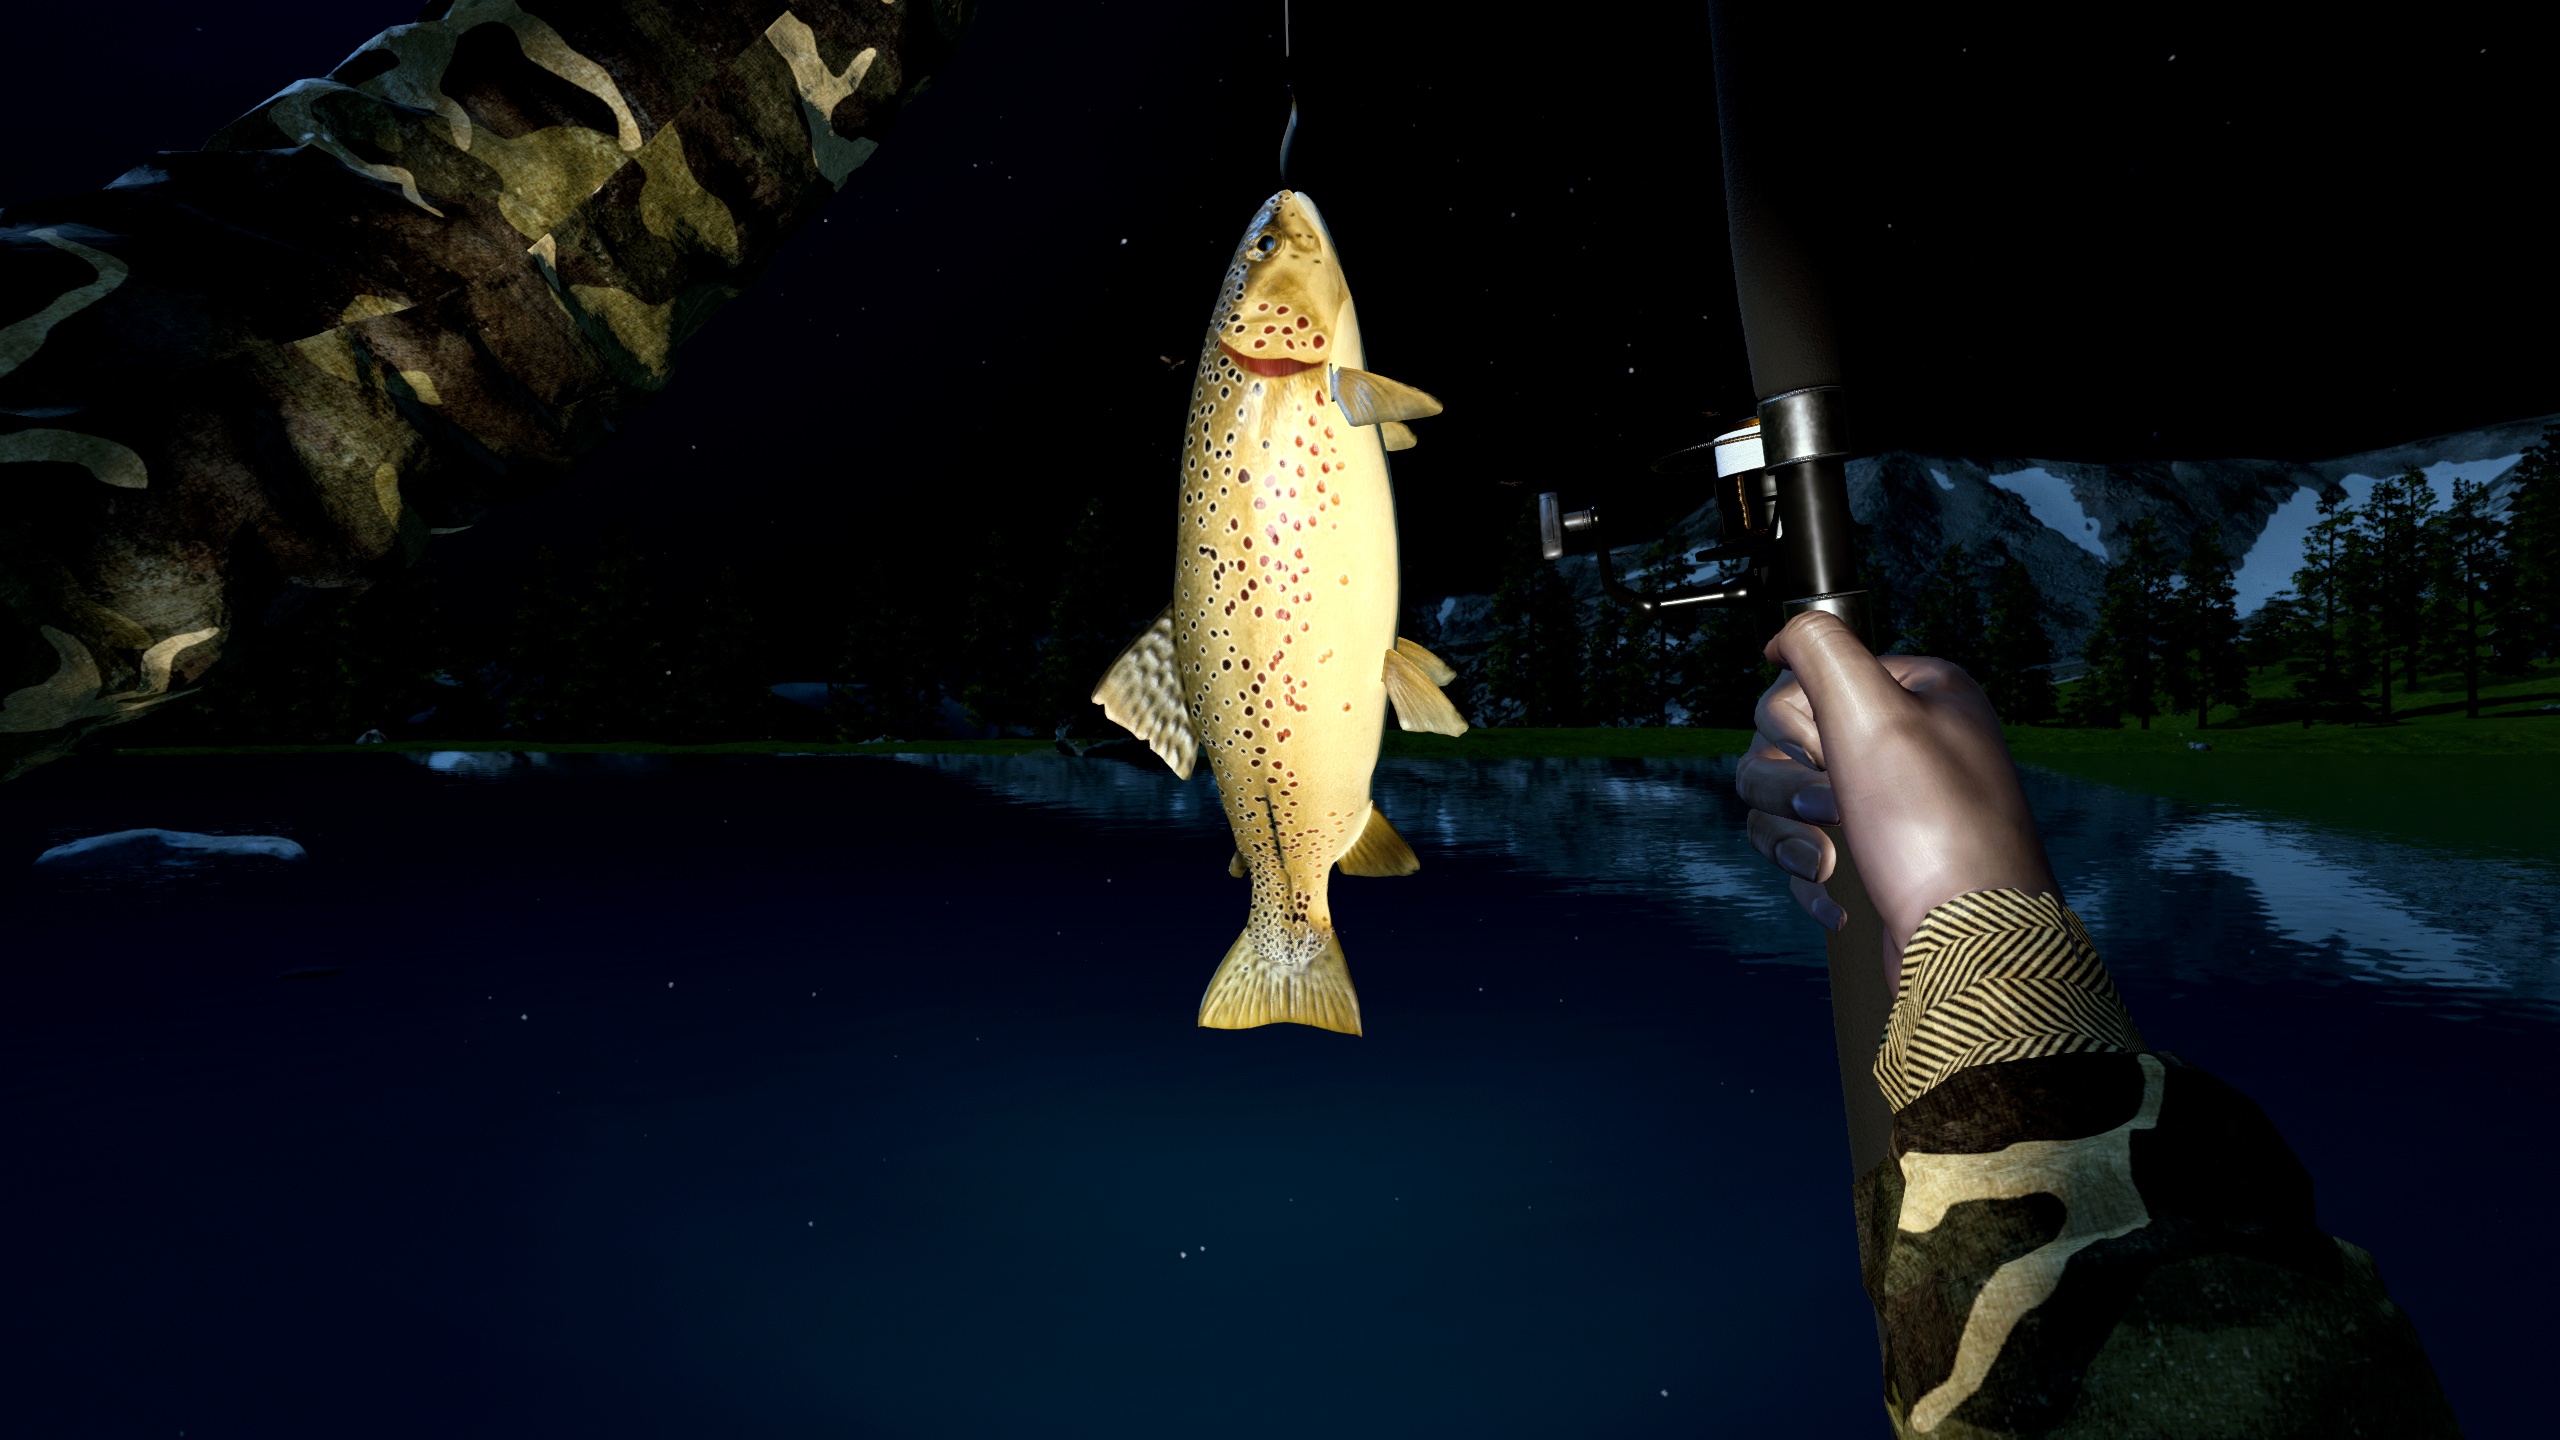 Tải game Ultimate Fishing Simulator miễn phí